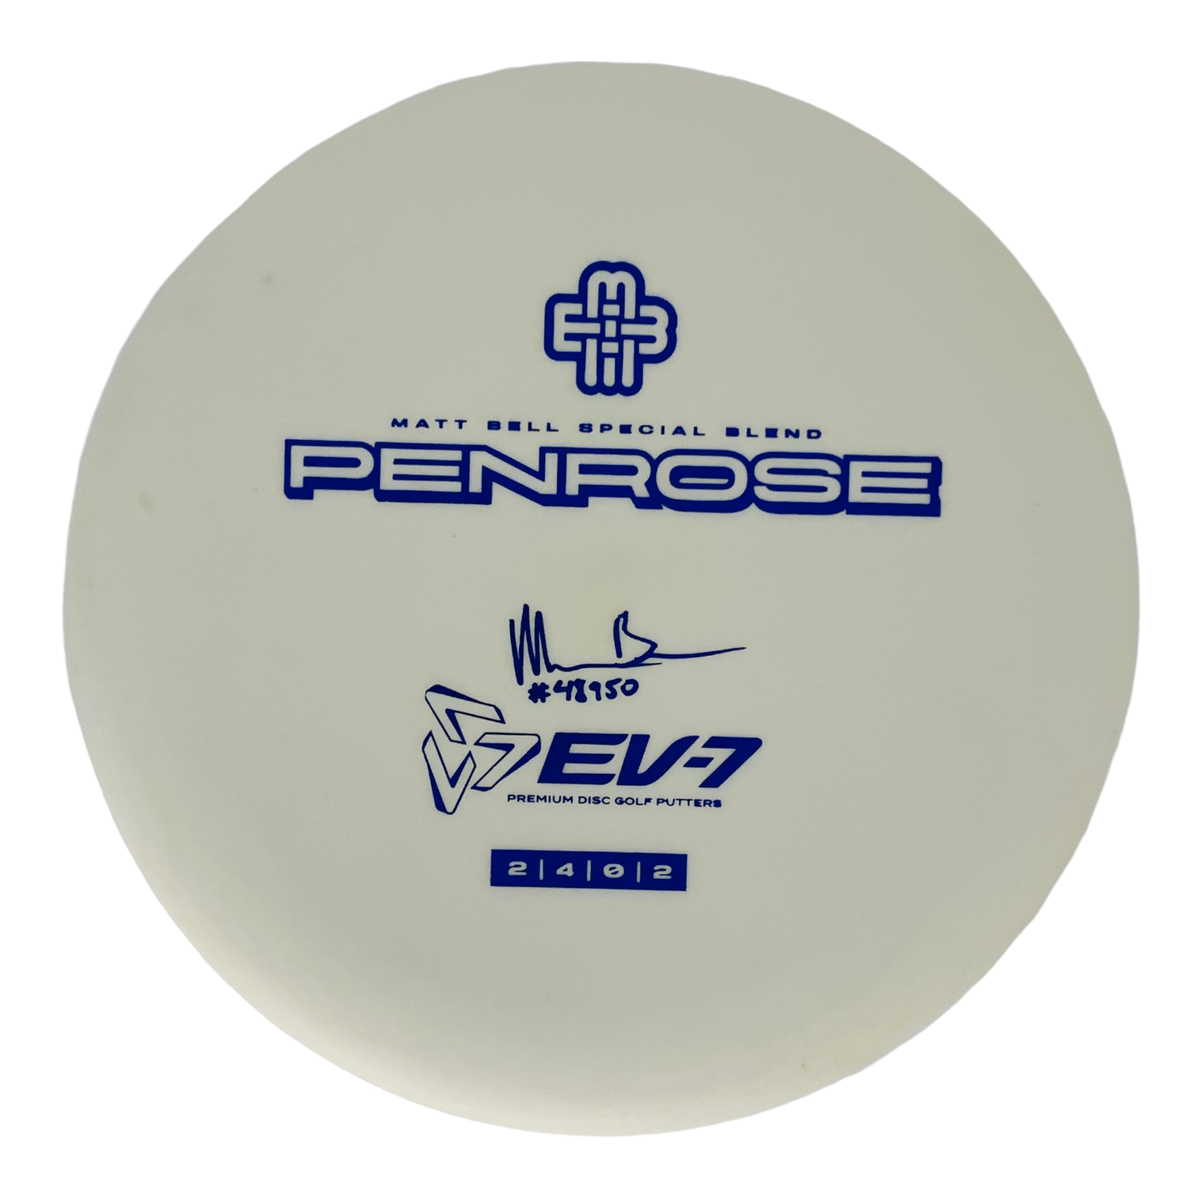 EV-7 Penrose - Matt Bell Special Blend